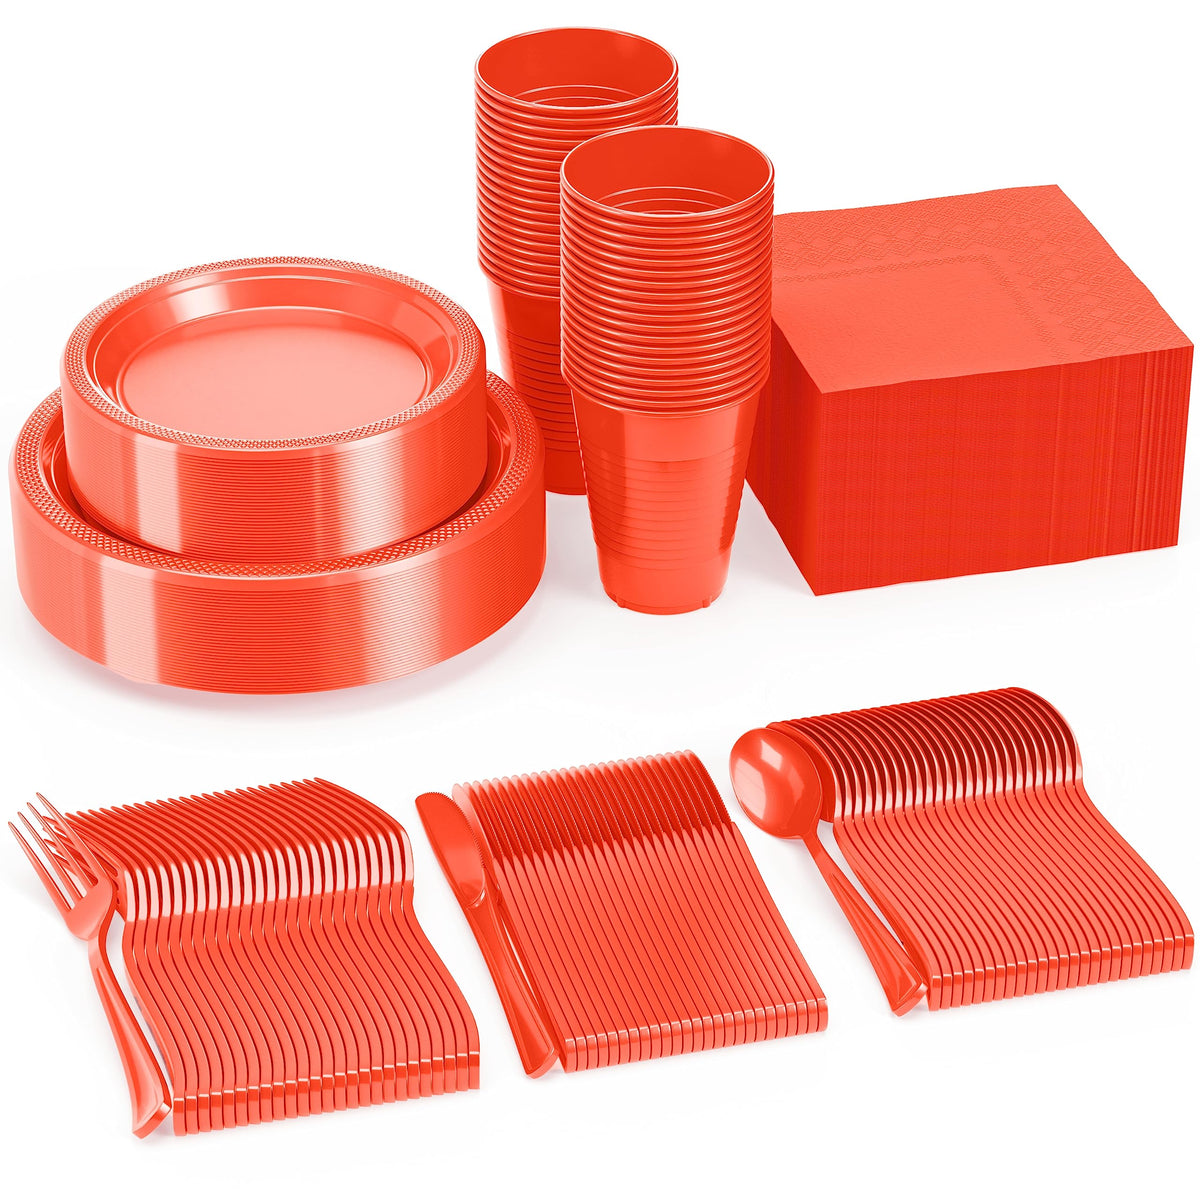 350 Pcs Orange Plastic Disposable Tableware Set